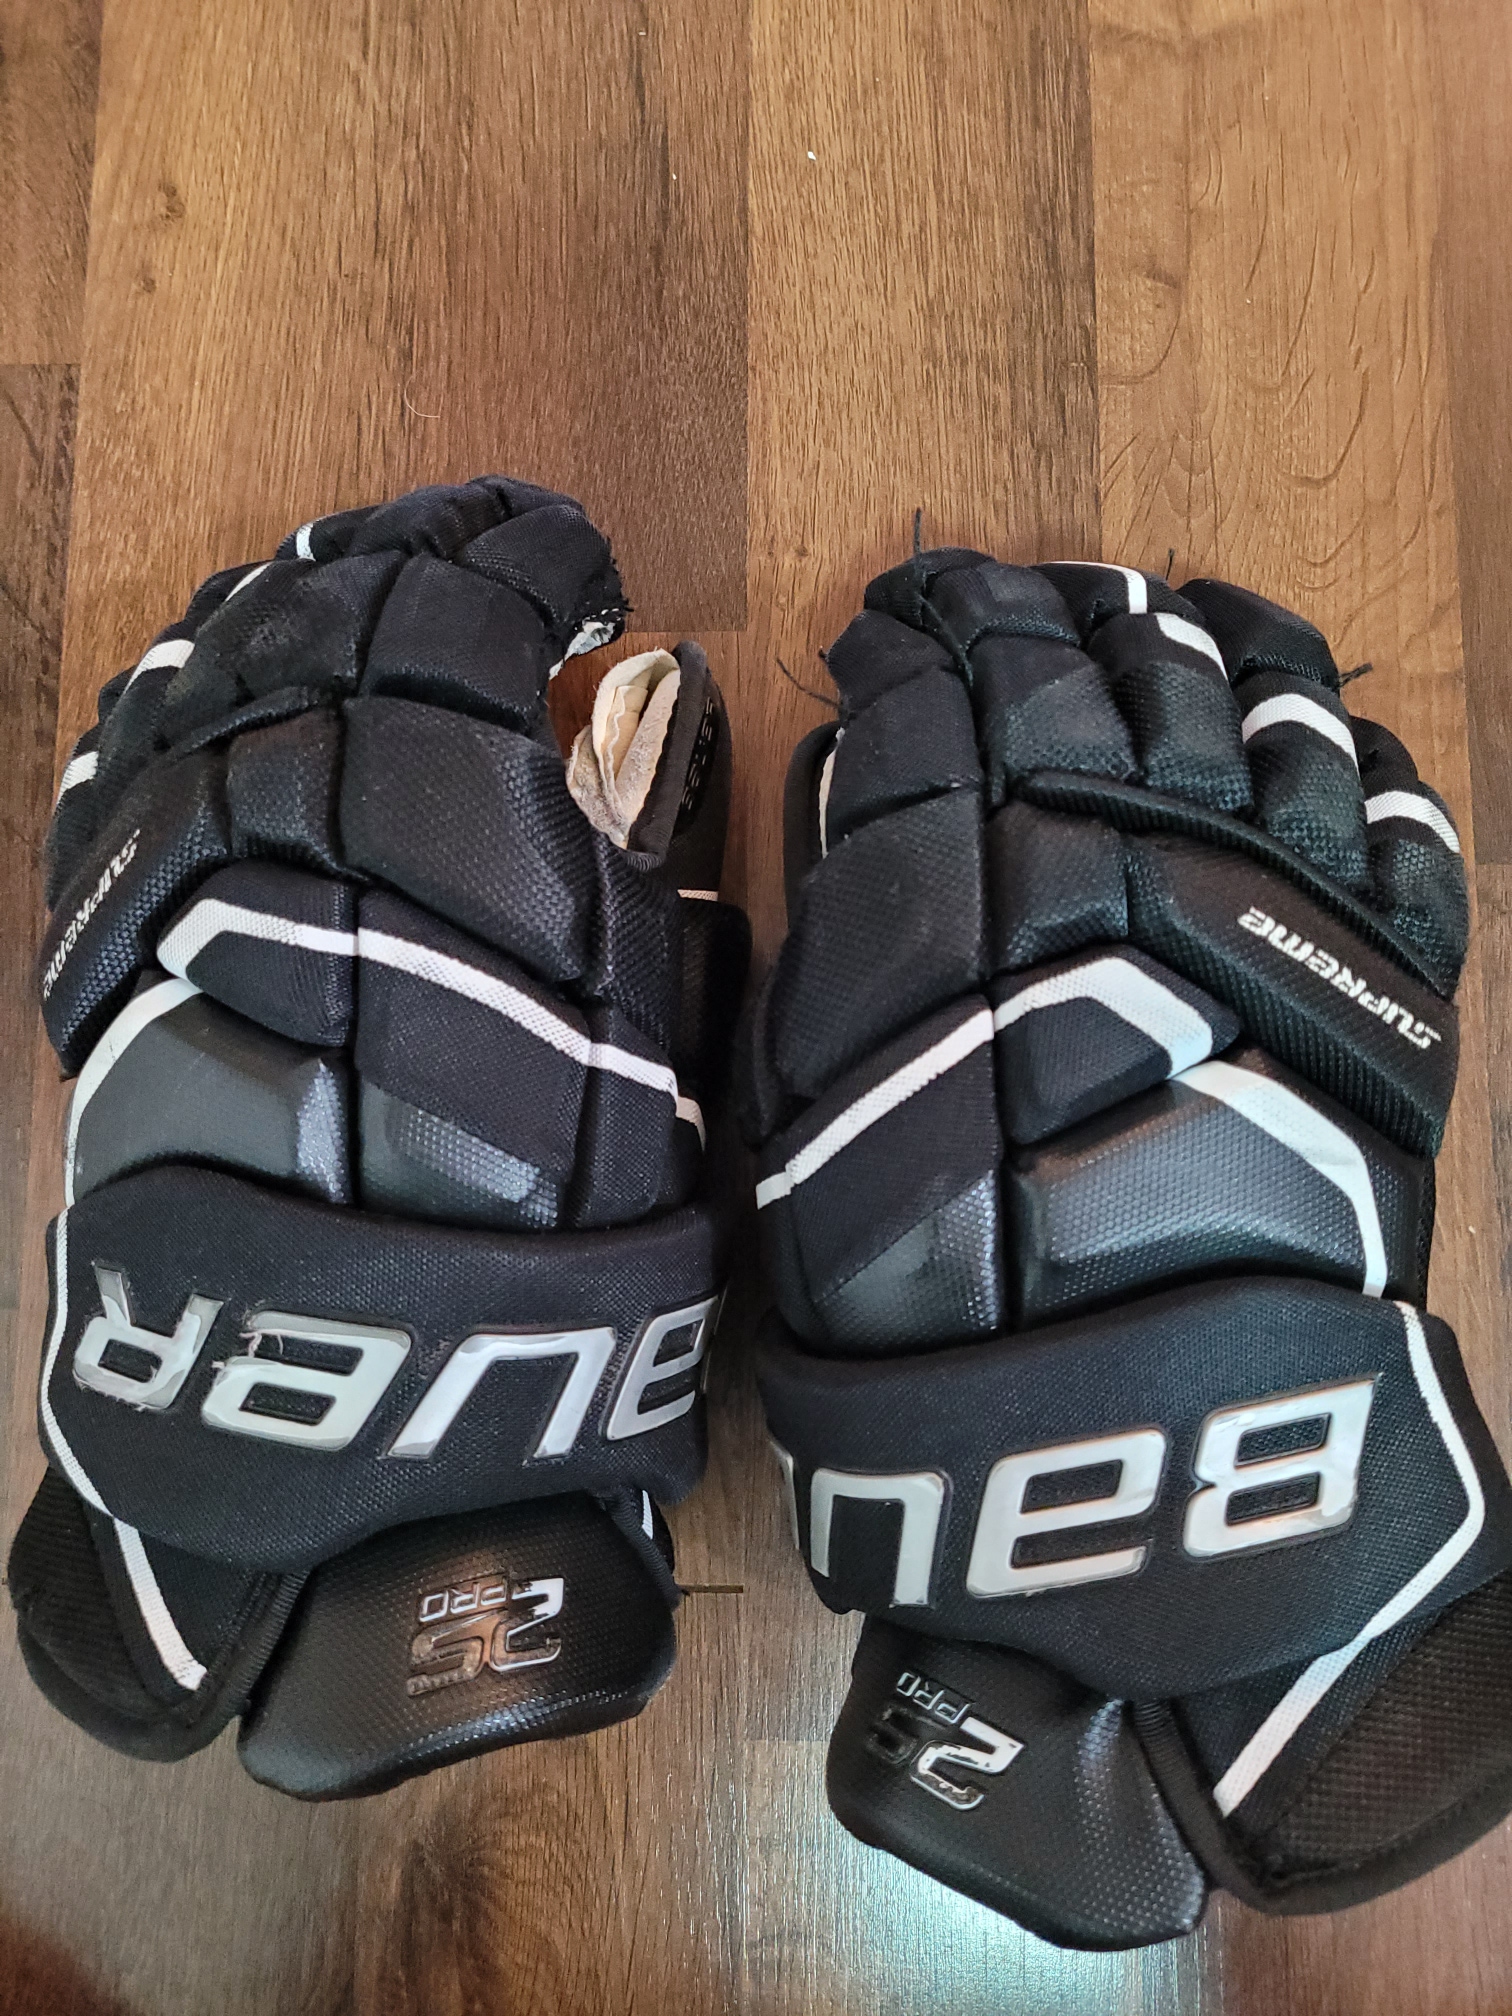 Used Bauer Supreme 2S Pro Gloves 14"